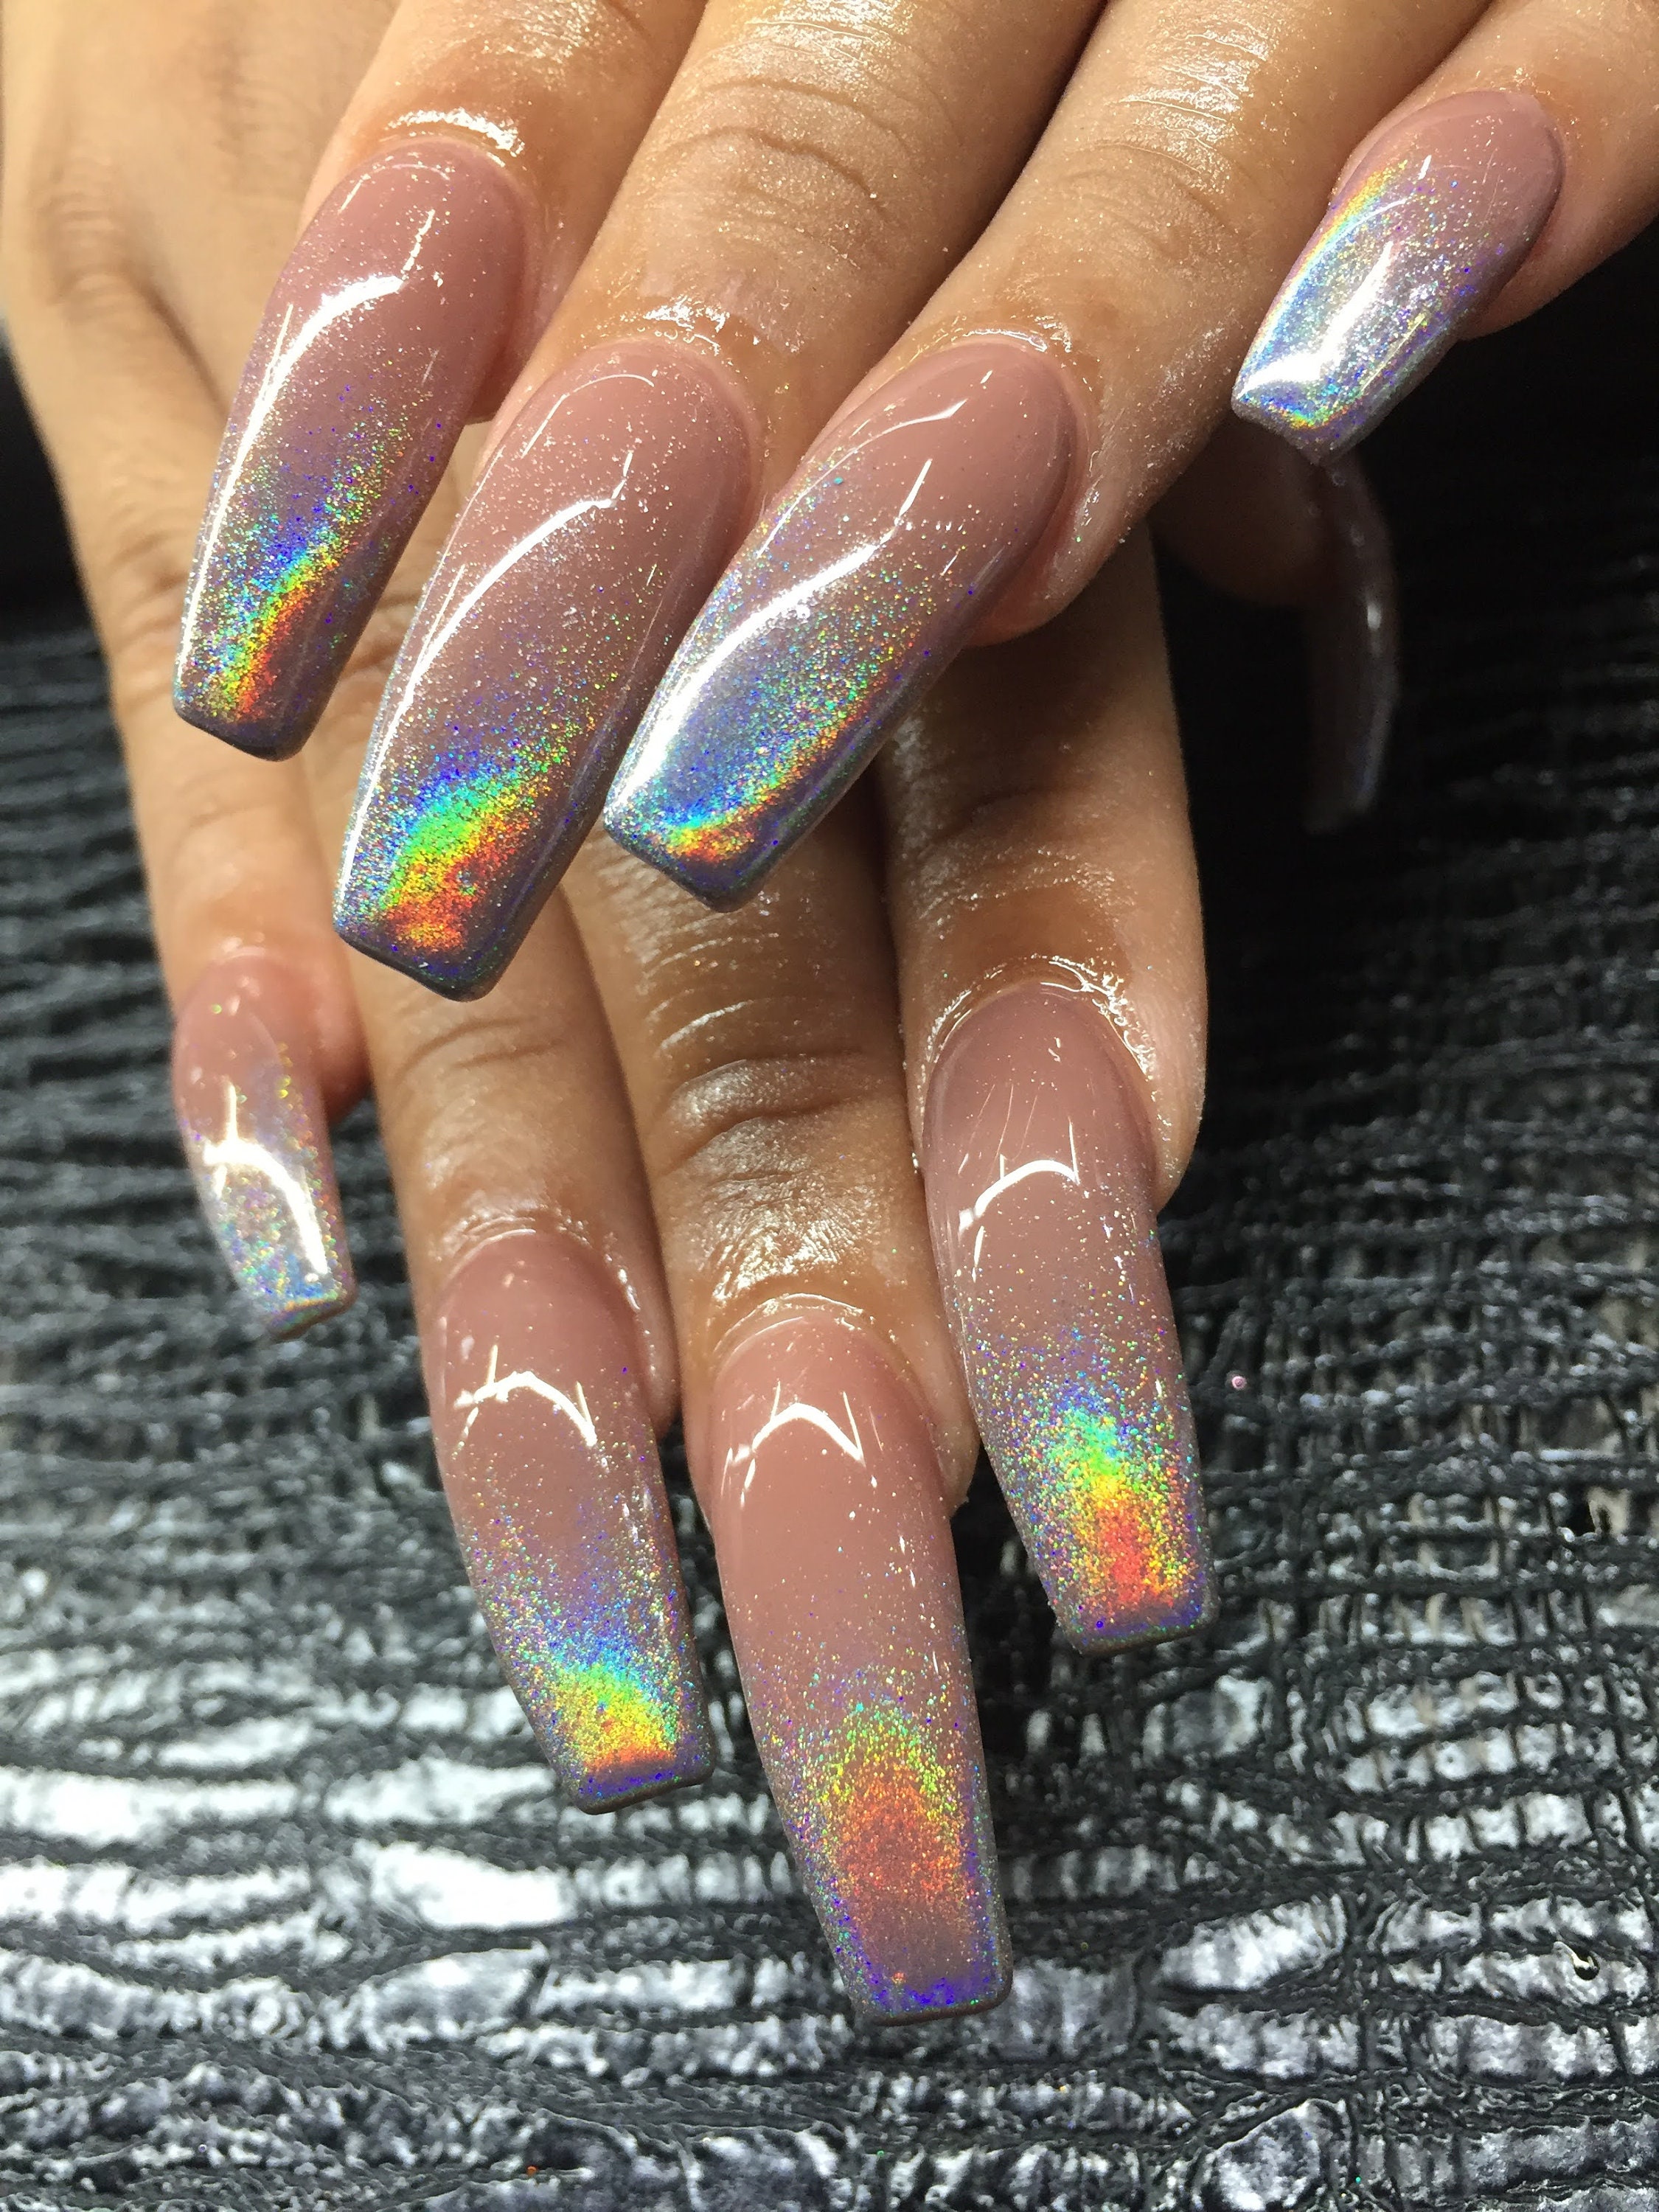 Beyprern 1Box Holographic Powder on Nails Laser Silver Glitter Chrome | Gel  nail art designs, Gorgeous nails, Gel nail art